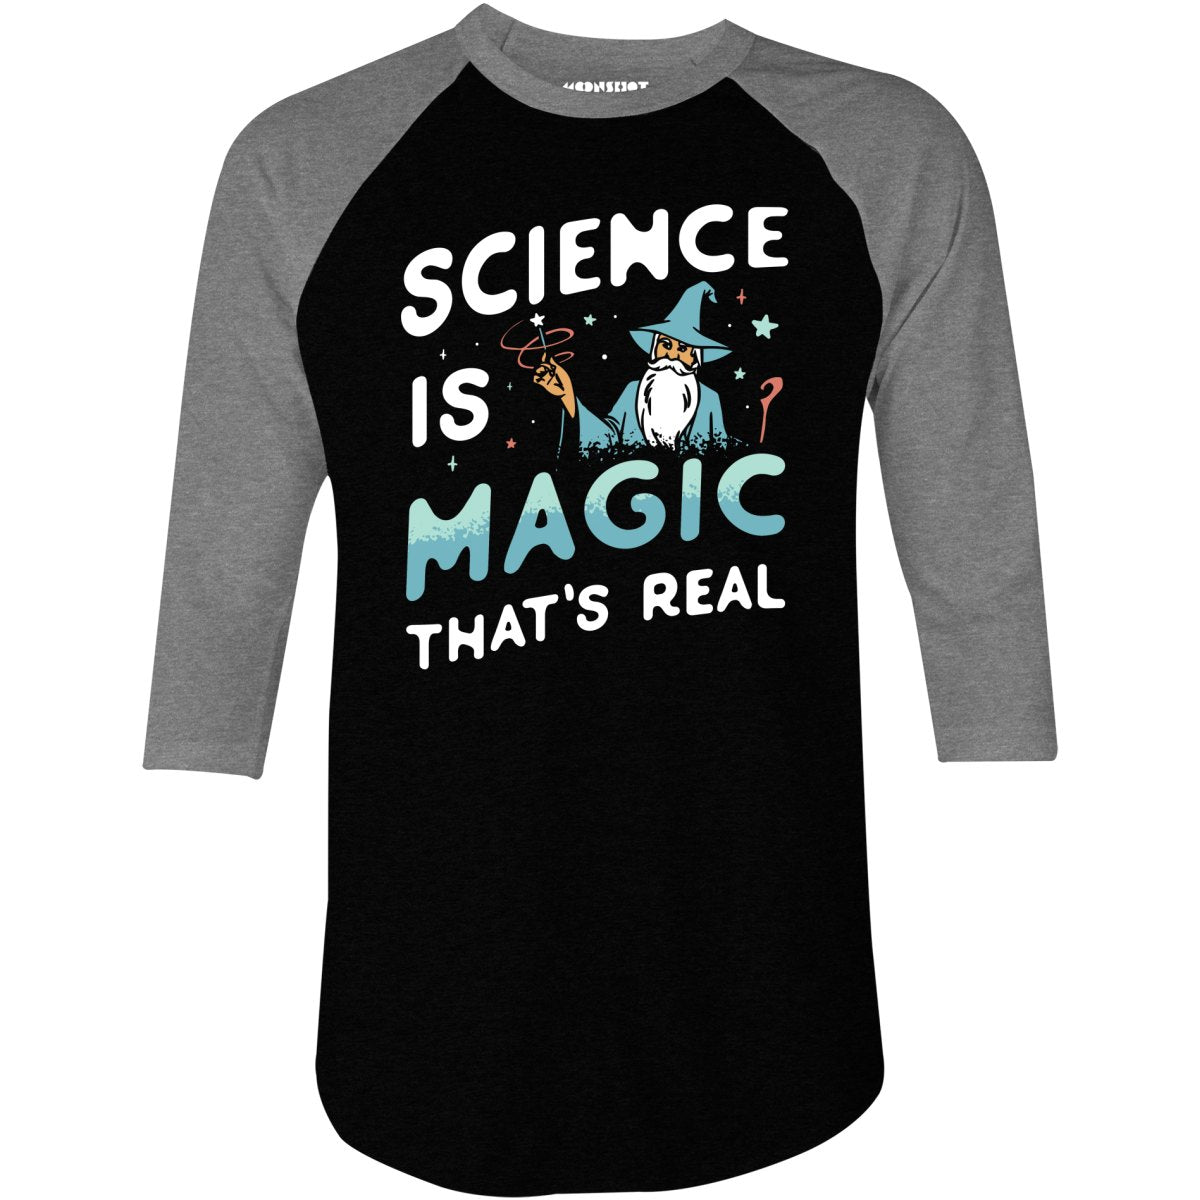 Science is Magic That's Real - 3/4 Sleeve Raglan T-Shirt